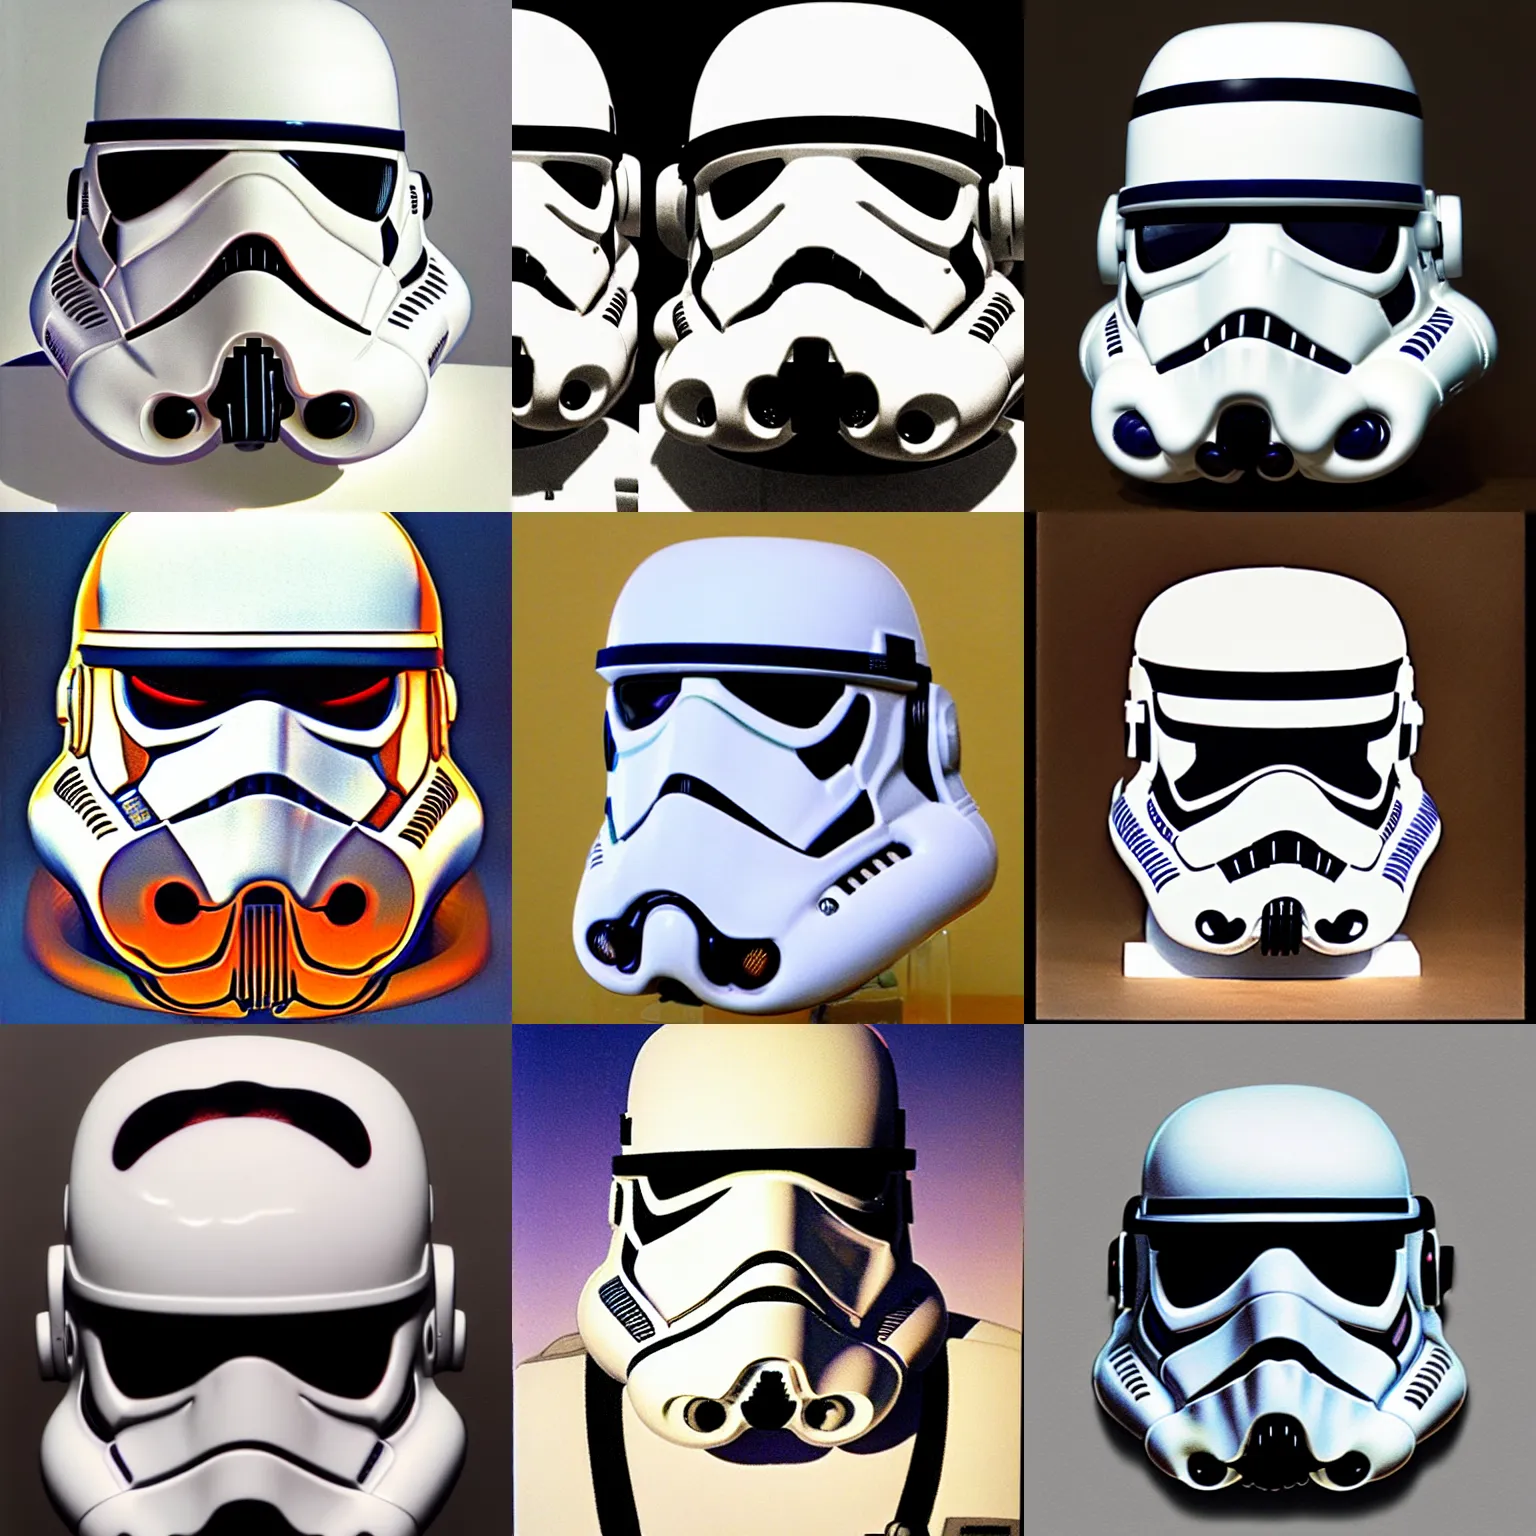 Prompt: Stormtrooper helmet by René Laloux, Jean Giraud, Mœbius, Moebius,